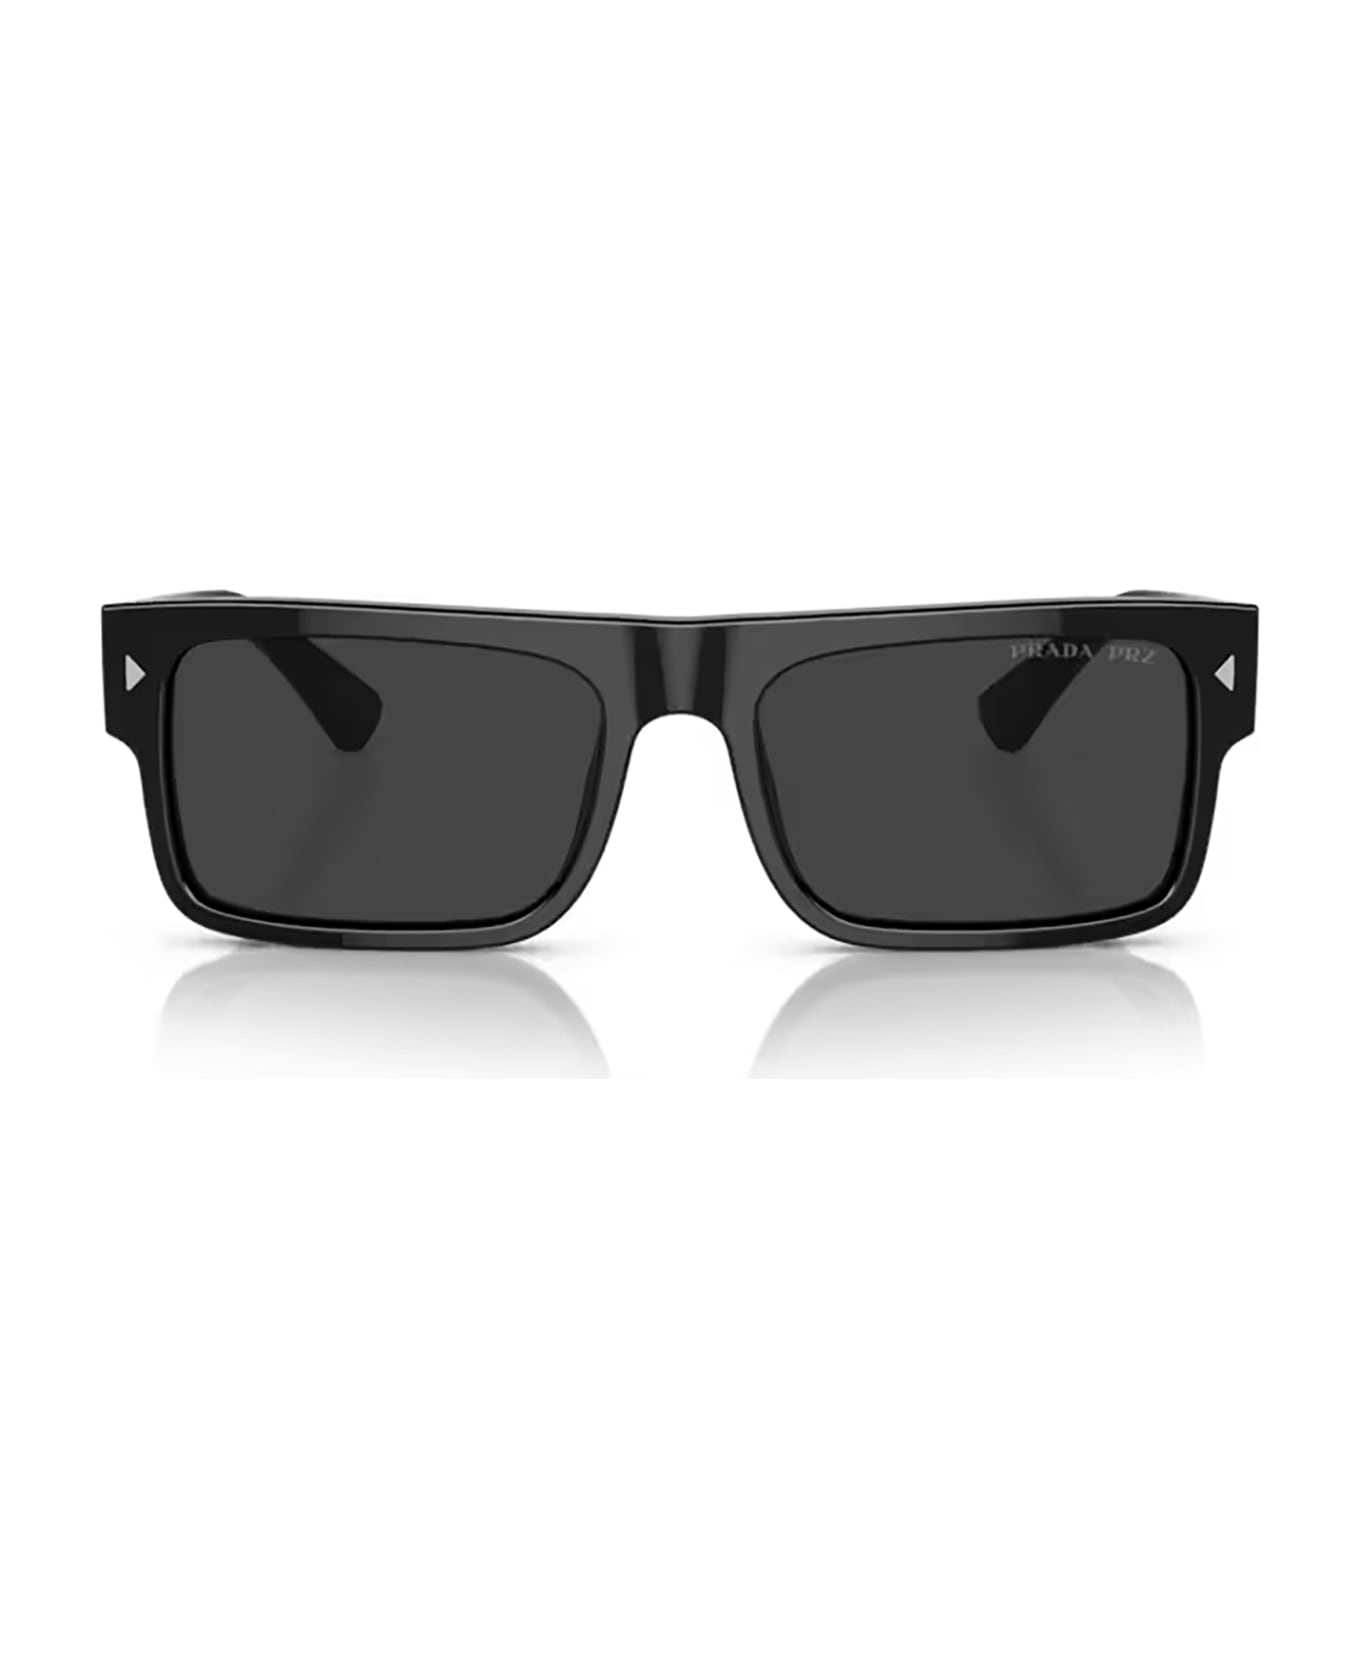 Prada Eyewear Pr A10s Black Sunglasses - Black